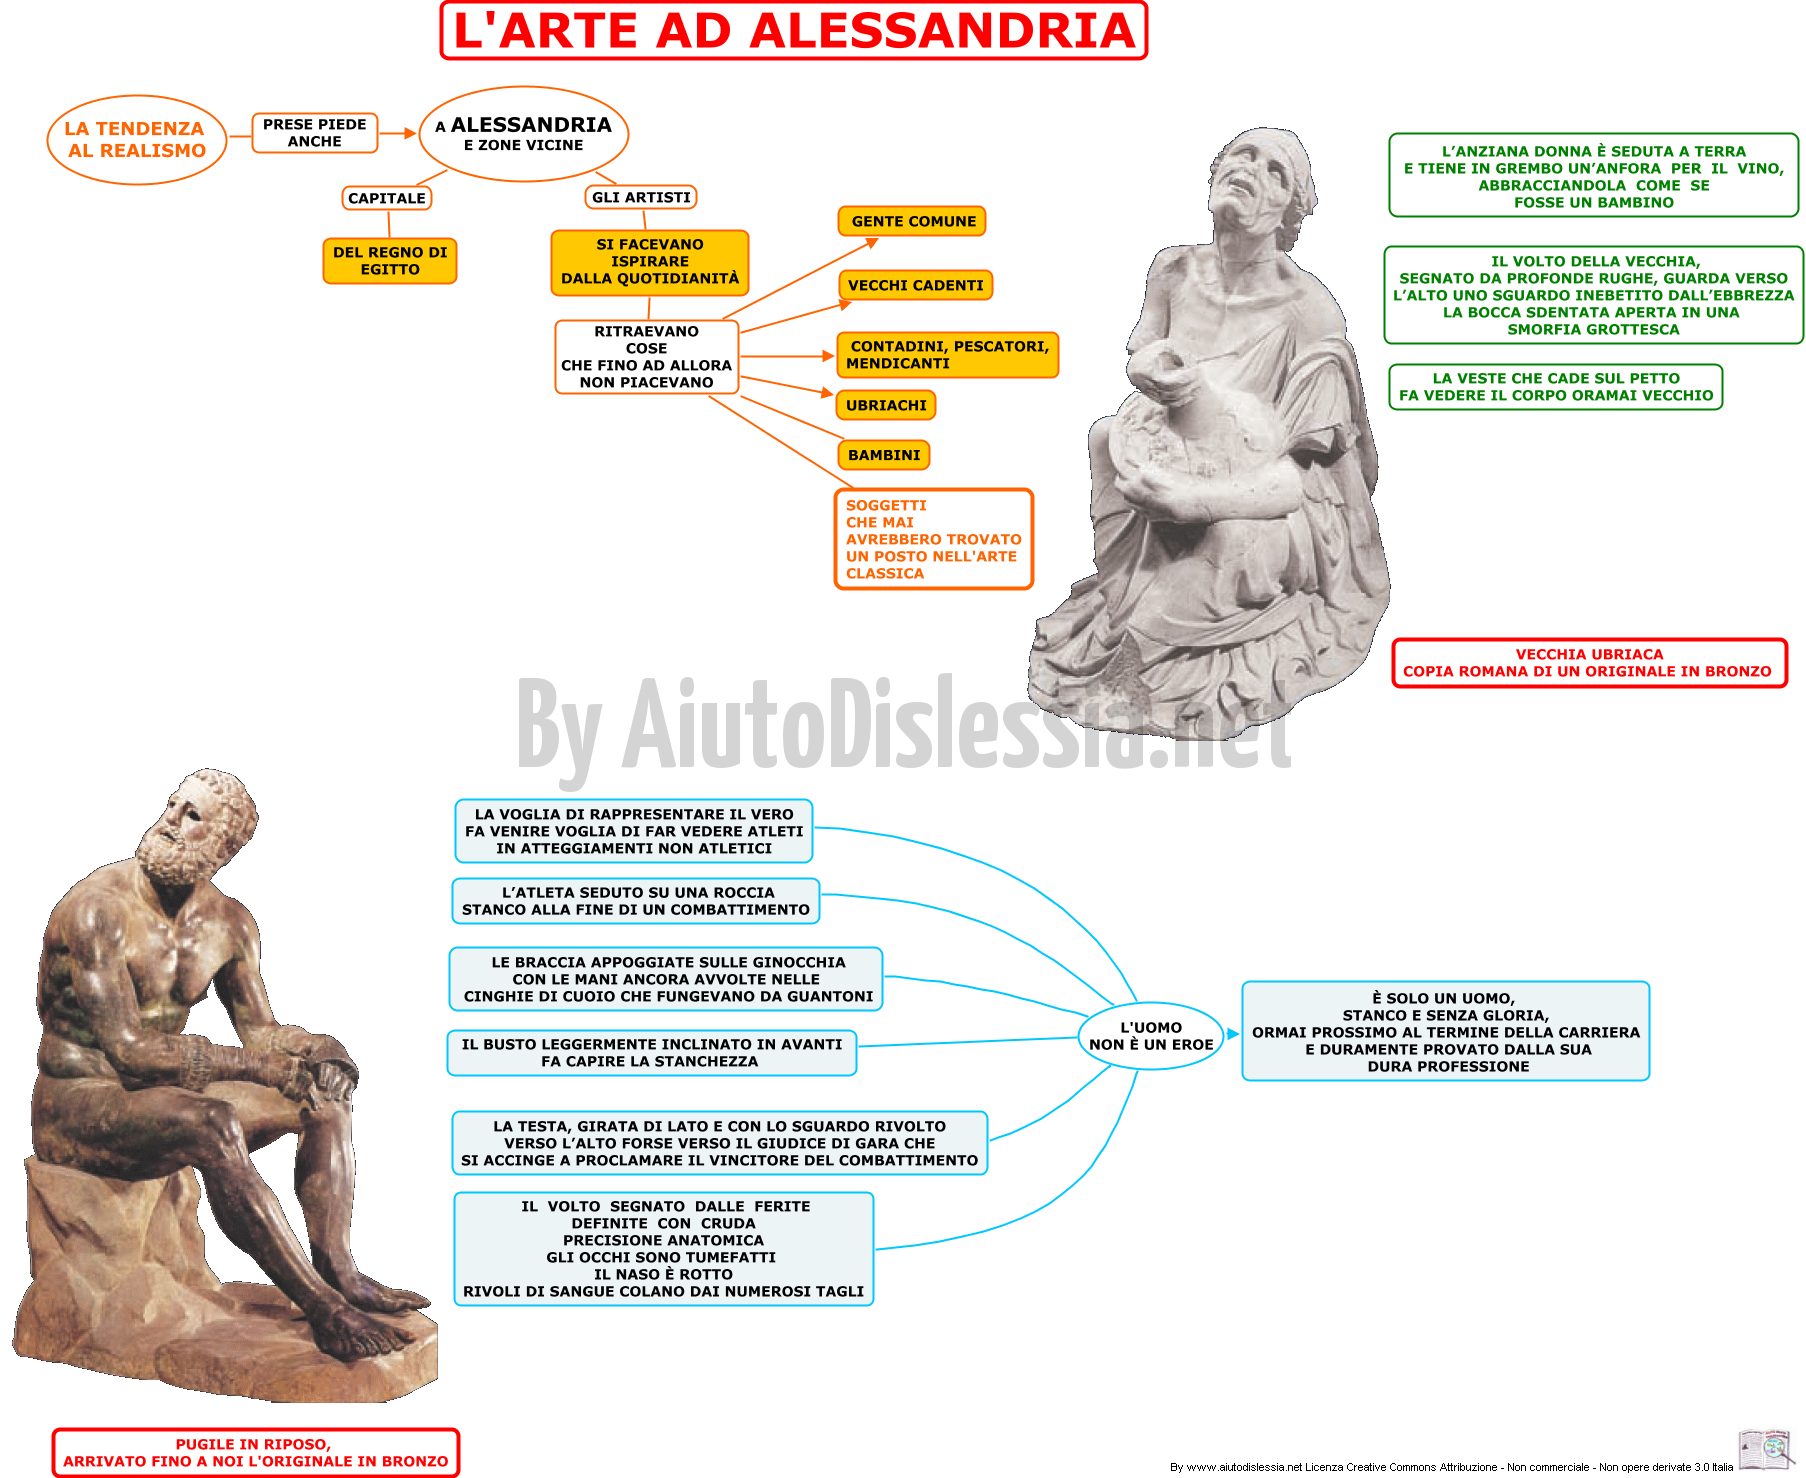 05. L'ARTE AD ALESSANDRIA